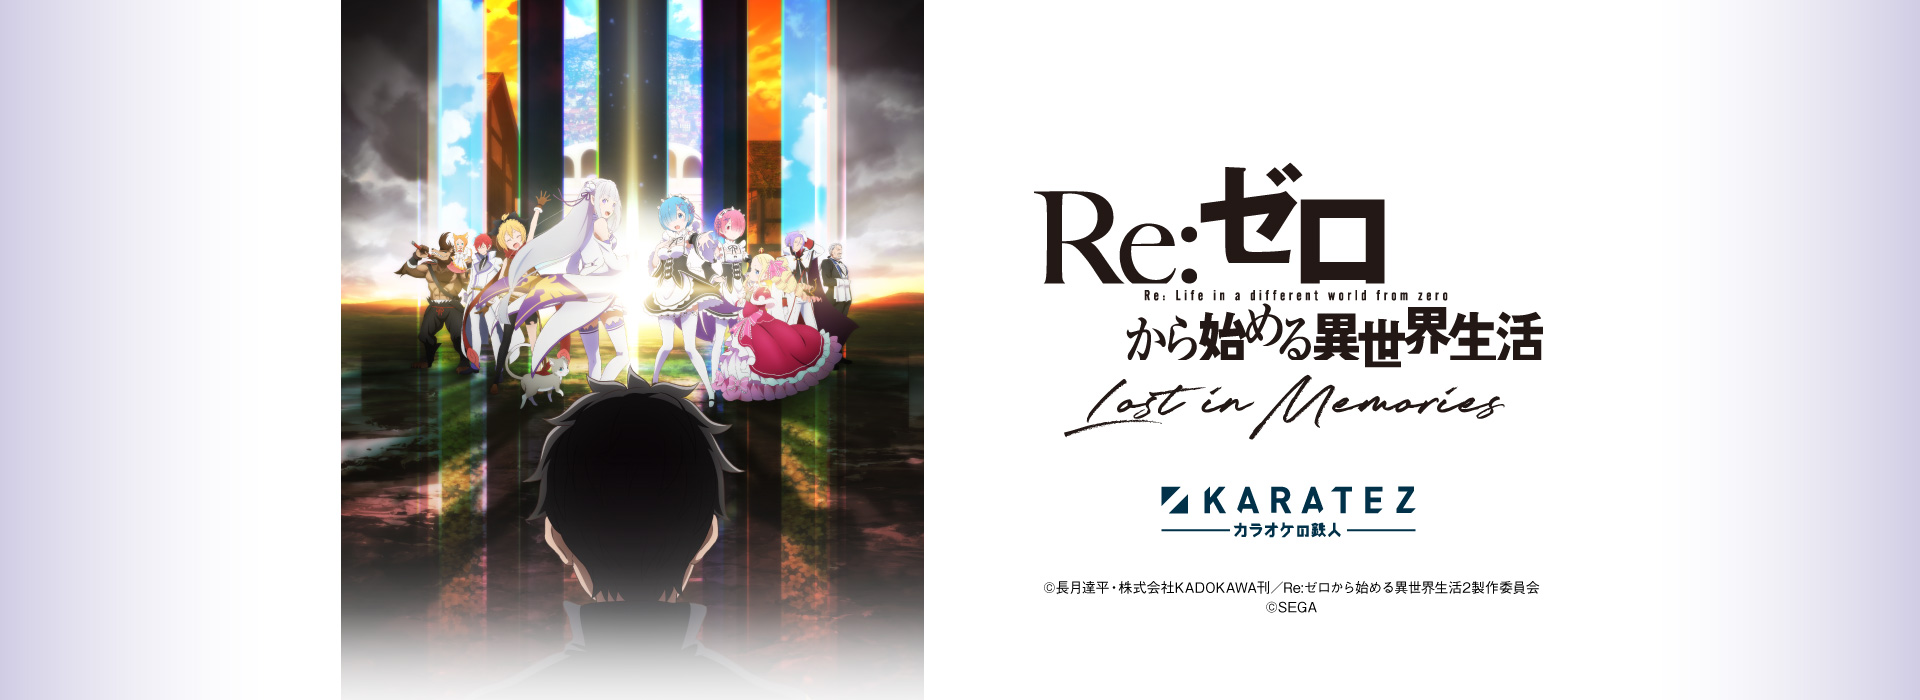 『Re:ゼロから始める異世界生活 Lost in Memories』×カラオケの鉄人